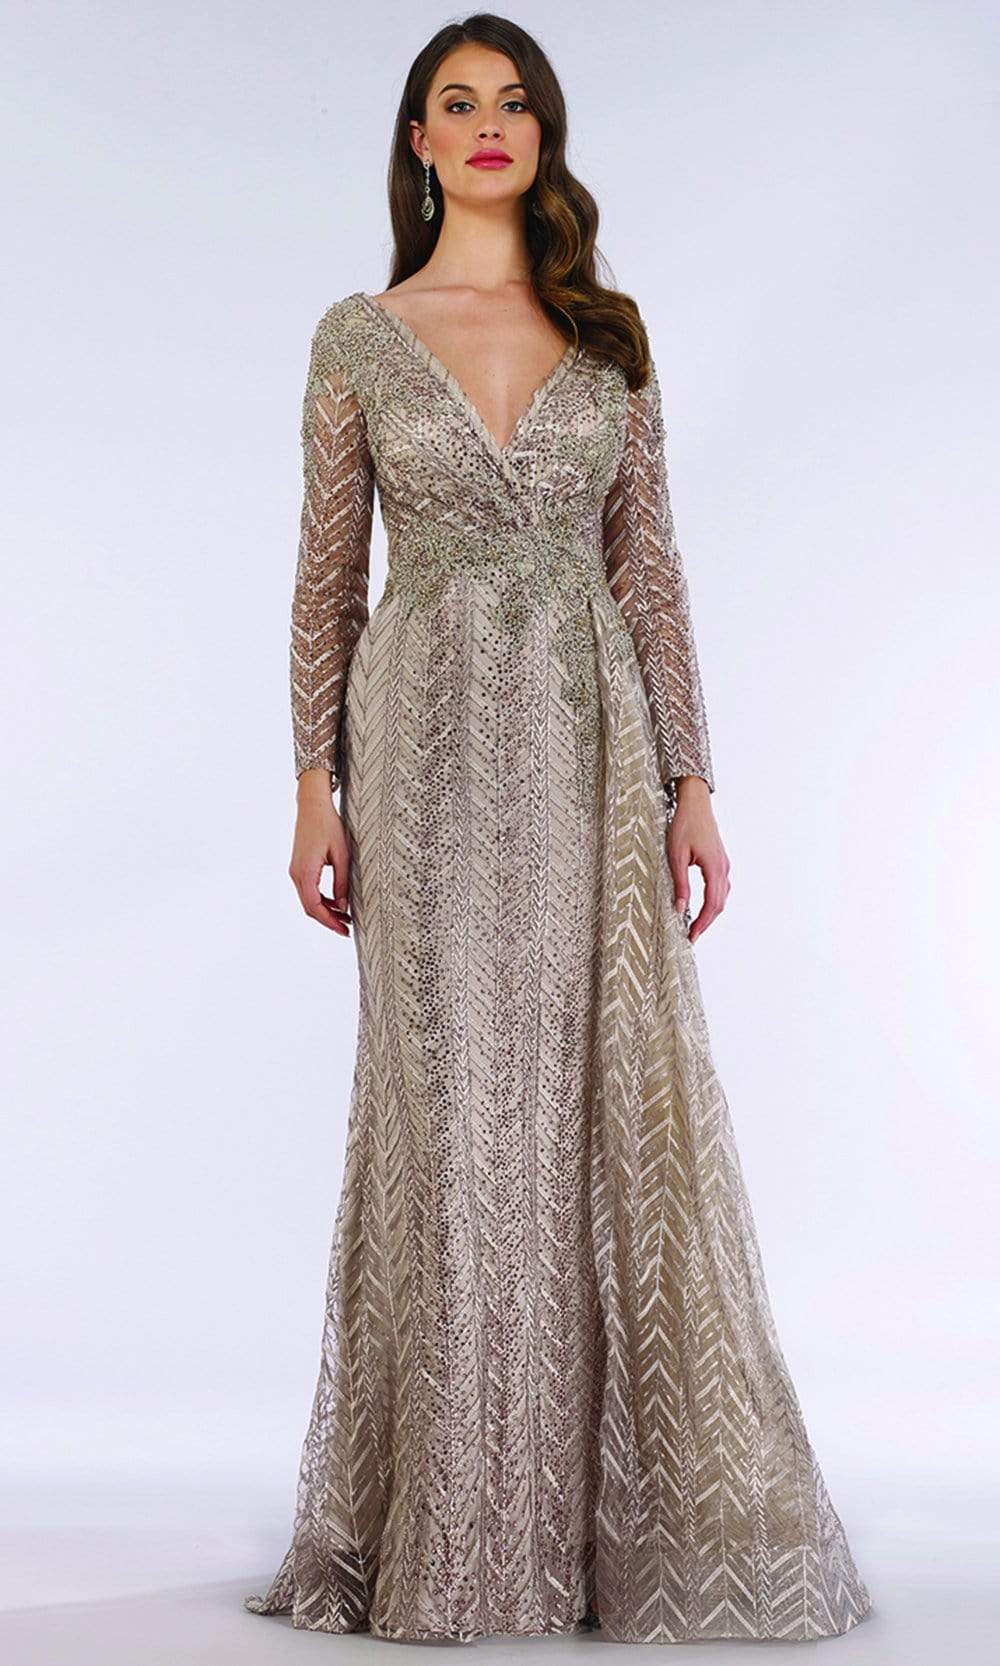 Lara Dresses - 29620 Trimmed V Neck Long Sleeve Adorned Evening Gown Mother of the Bride Dresses 4 / Khaki